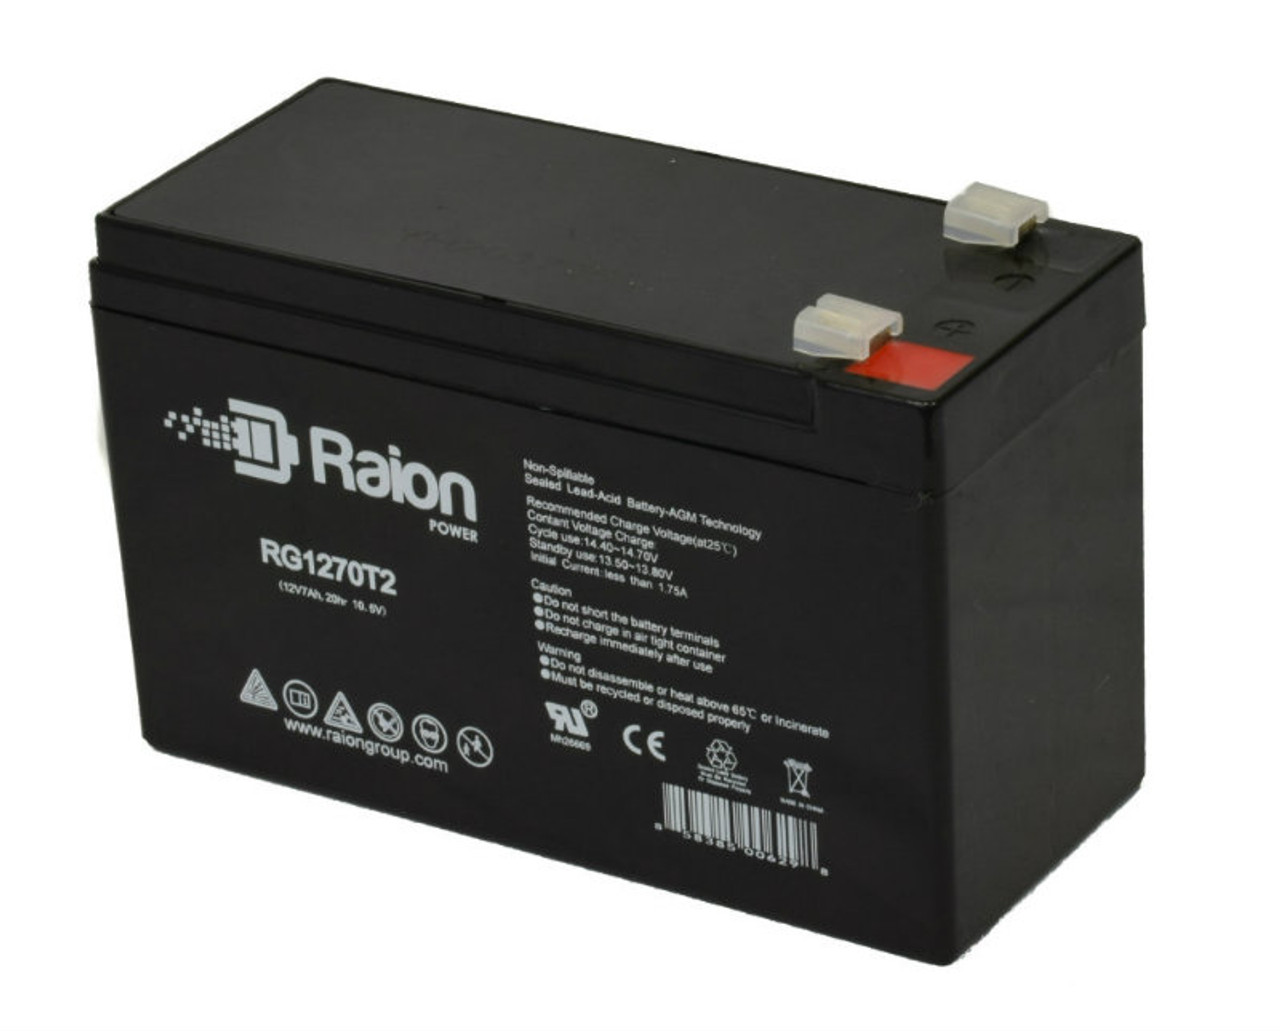 Raion Power Replacement 12V 7Ah RG1270T1 Fire Alarm Battery for Altronix AL300ULPD8